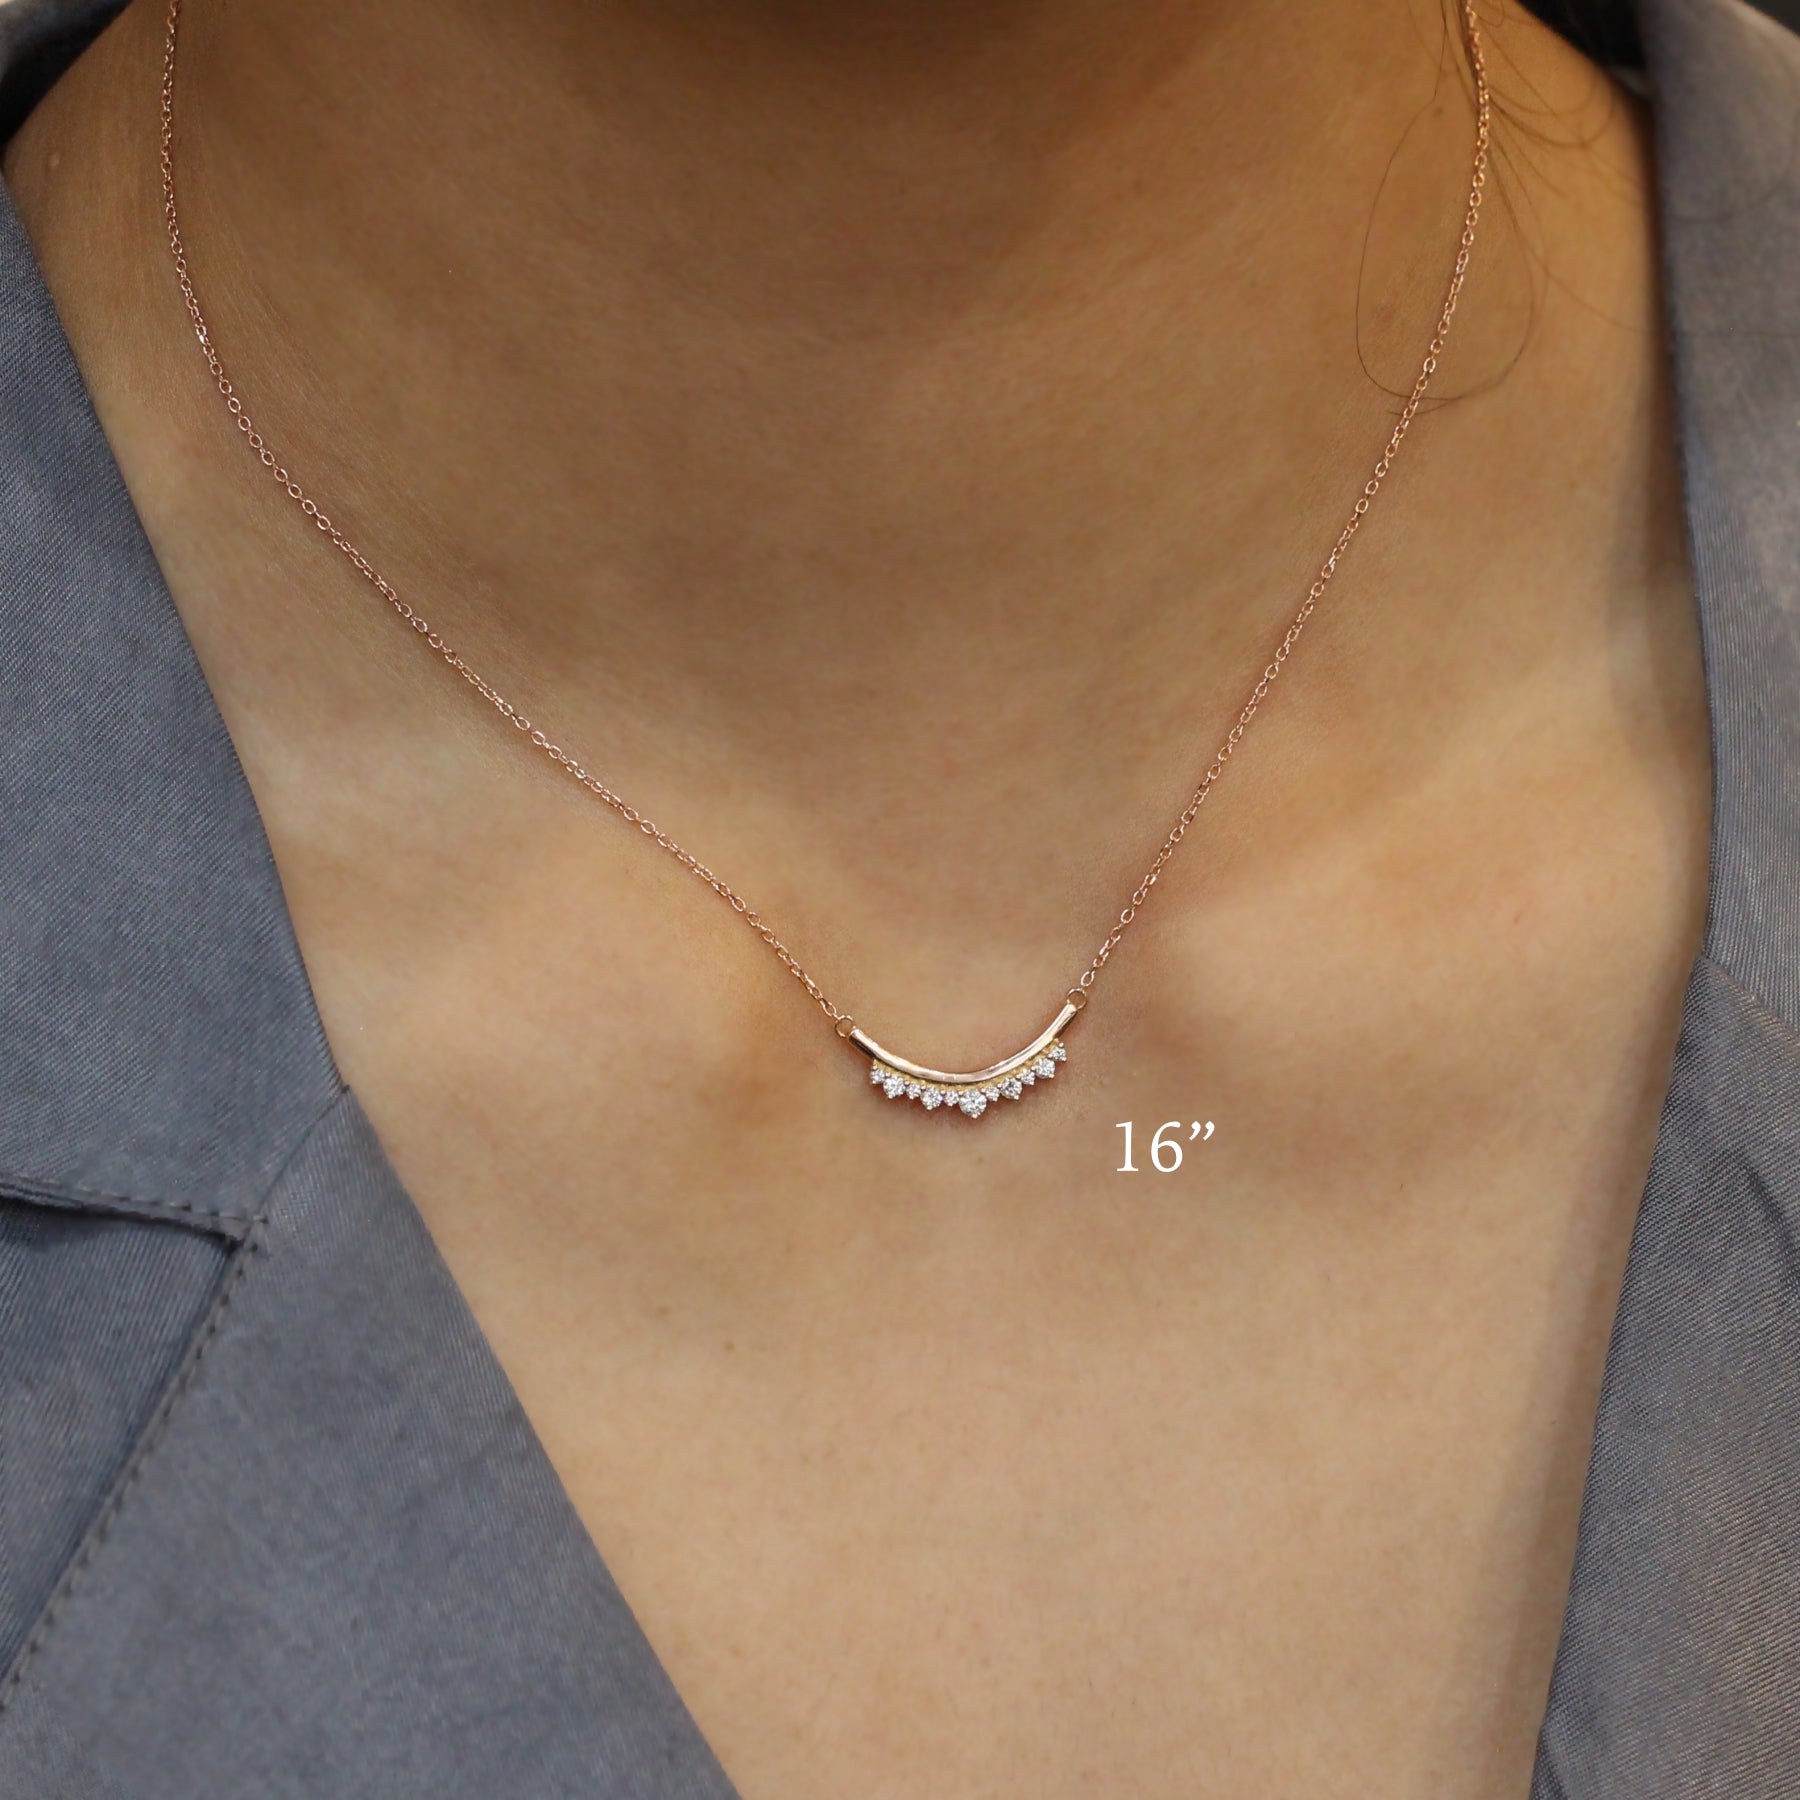 Crown diamond necklace rose gold U shaped pendant la more design jewelry